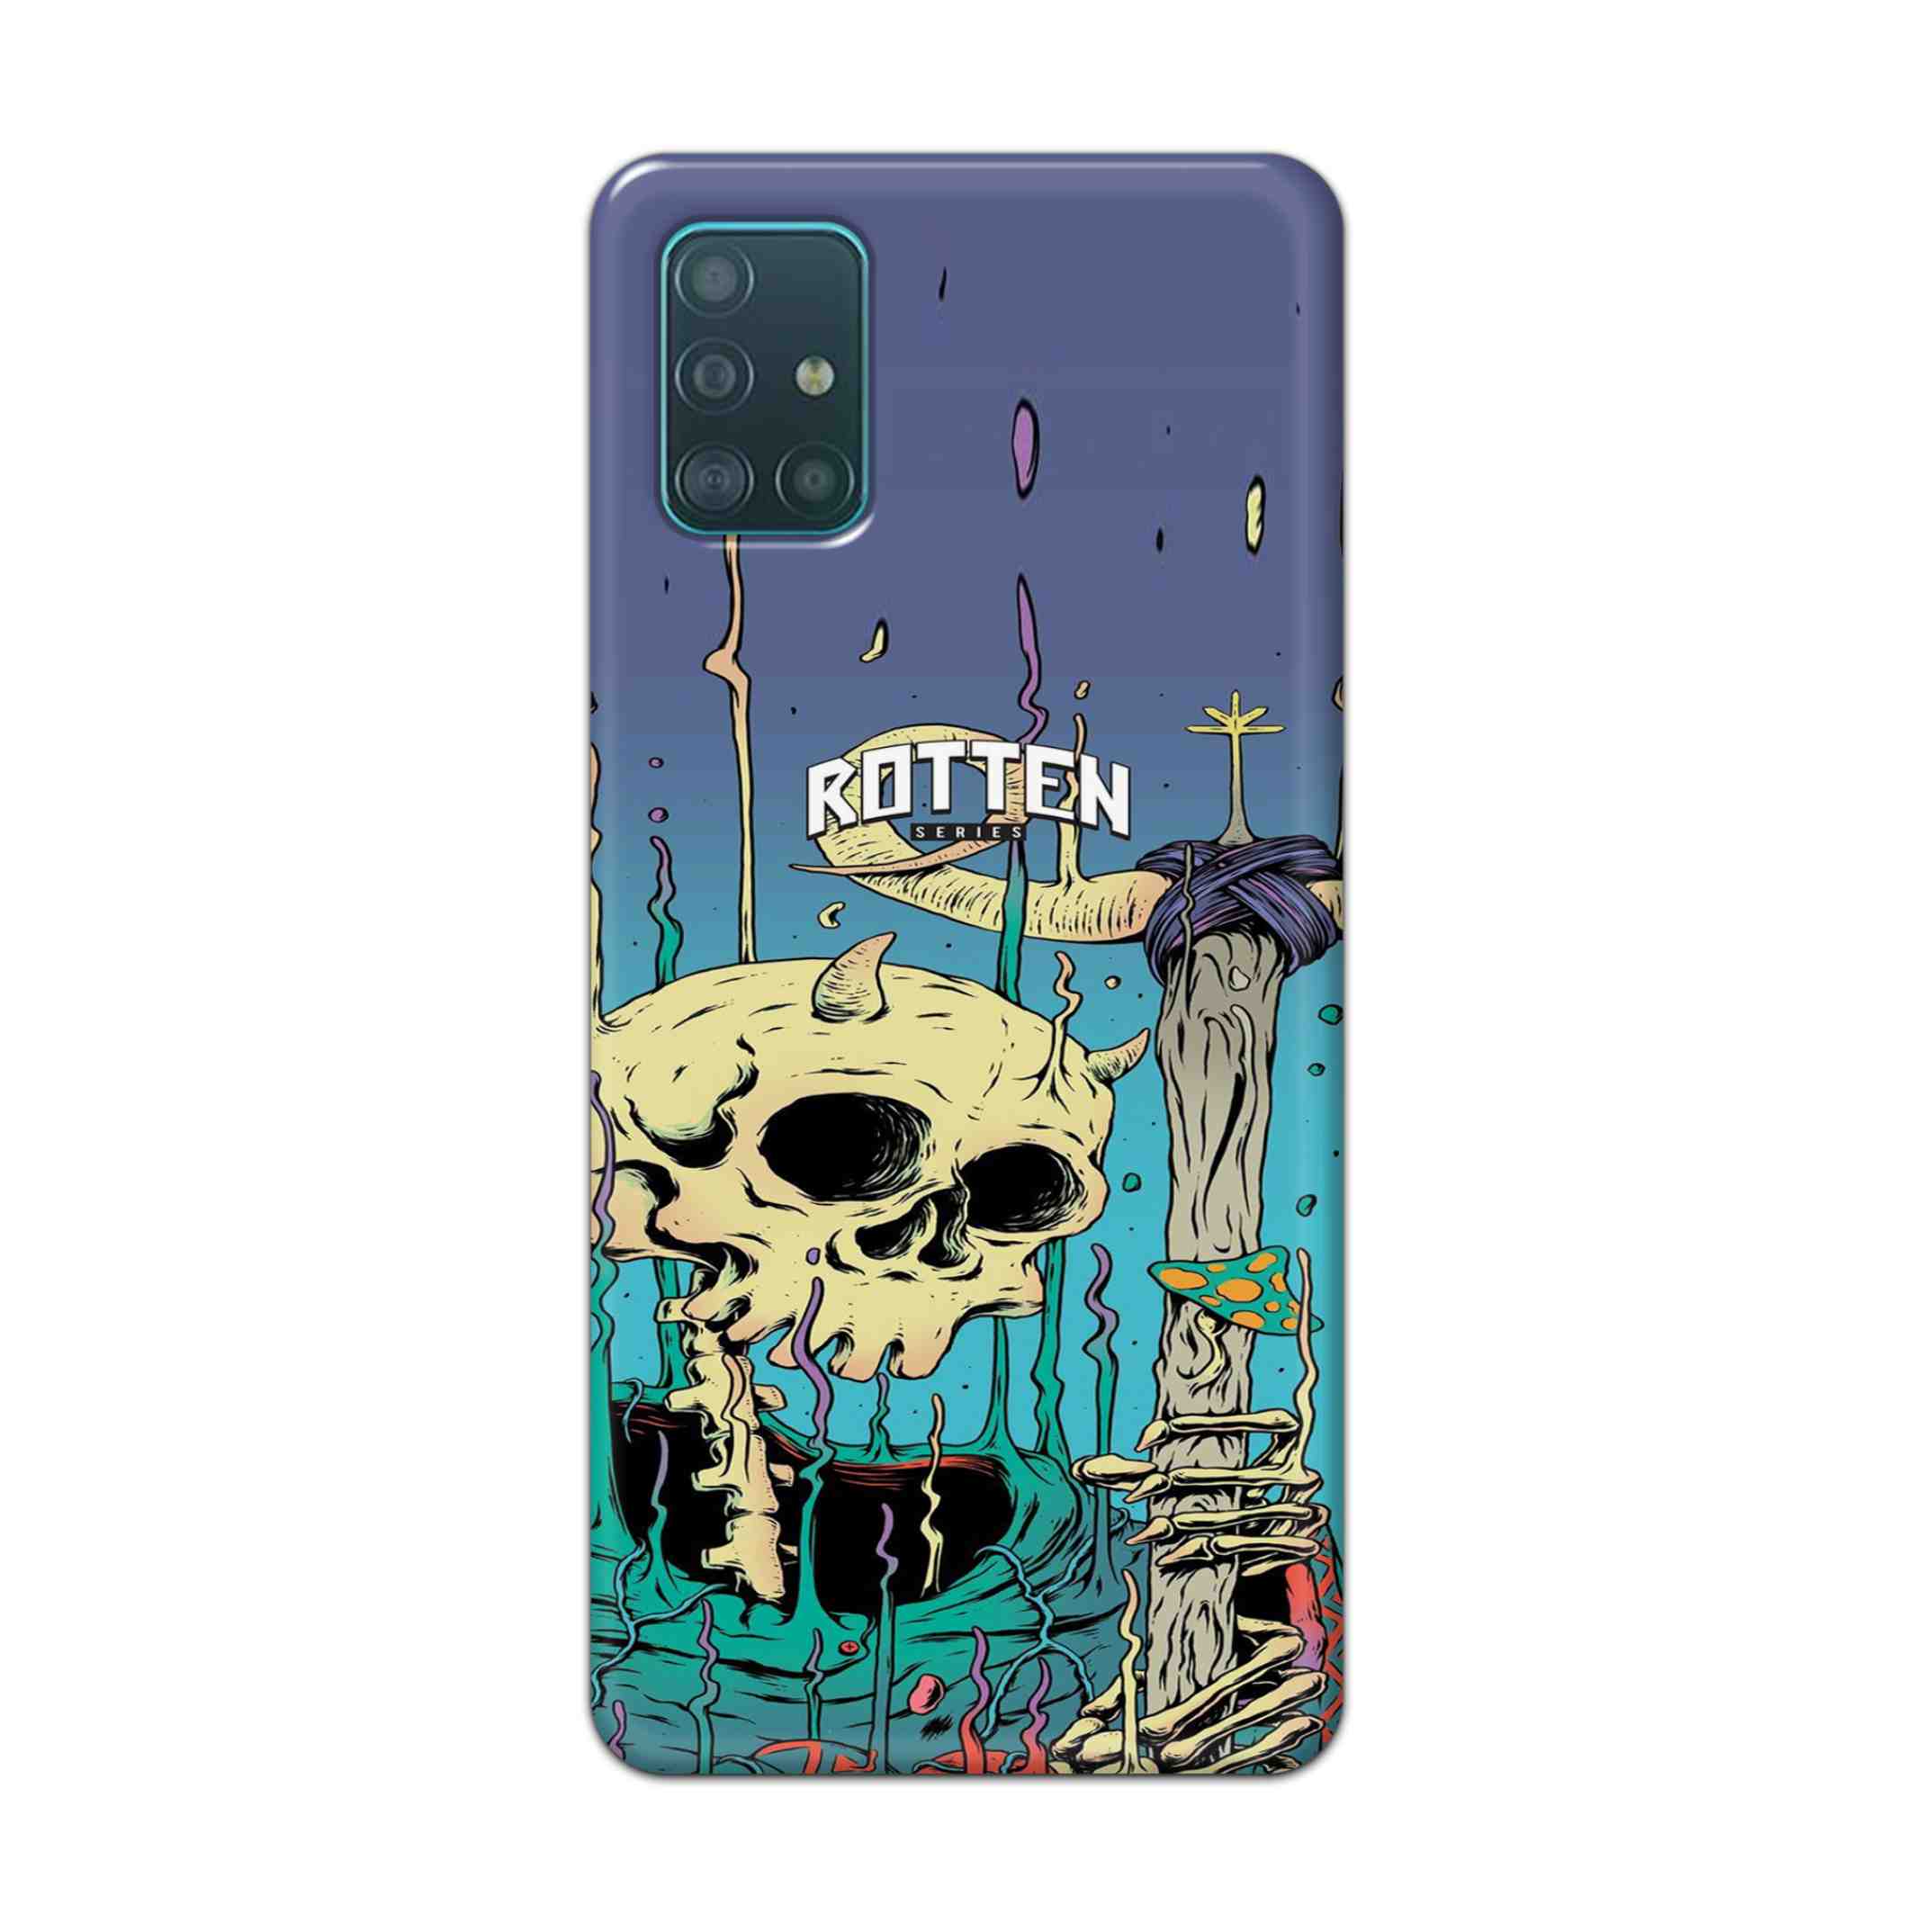 Buy Skull Hard Back Mobile Phone Case Cover For Samsung A51 Online